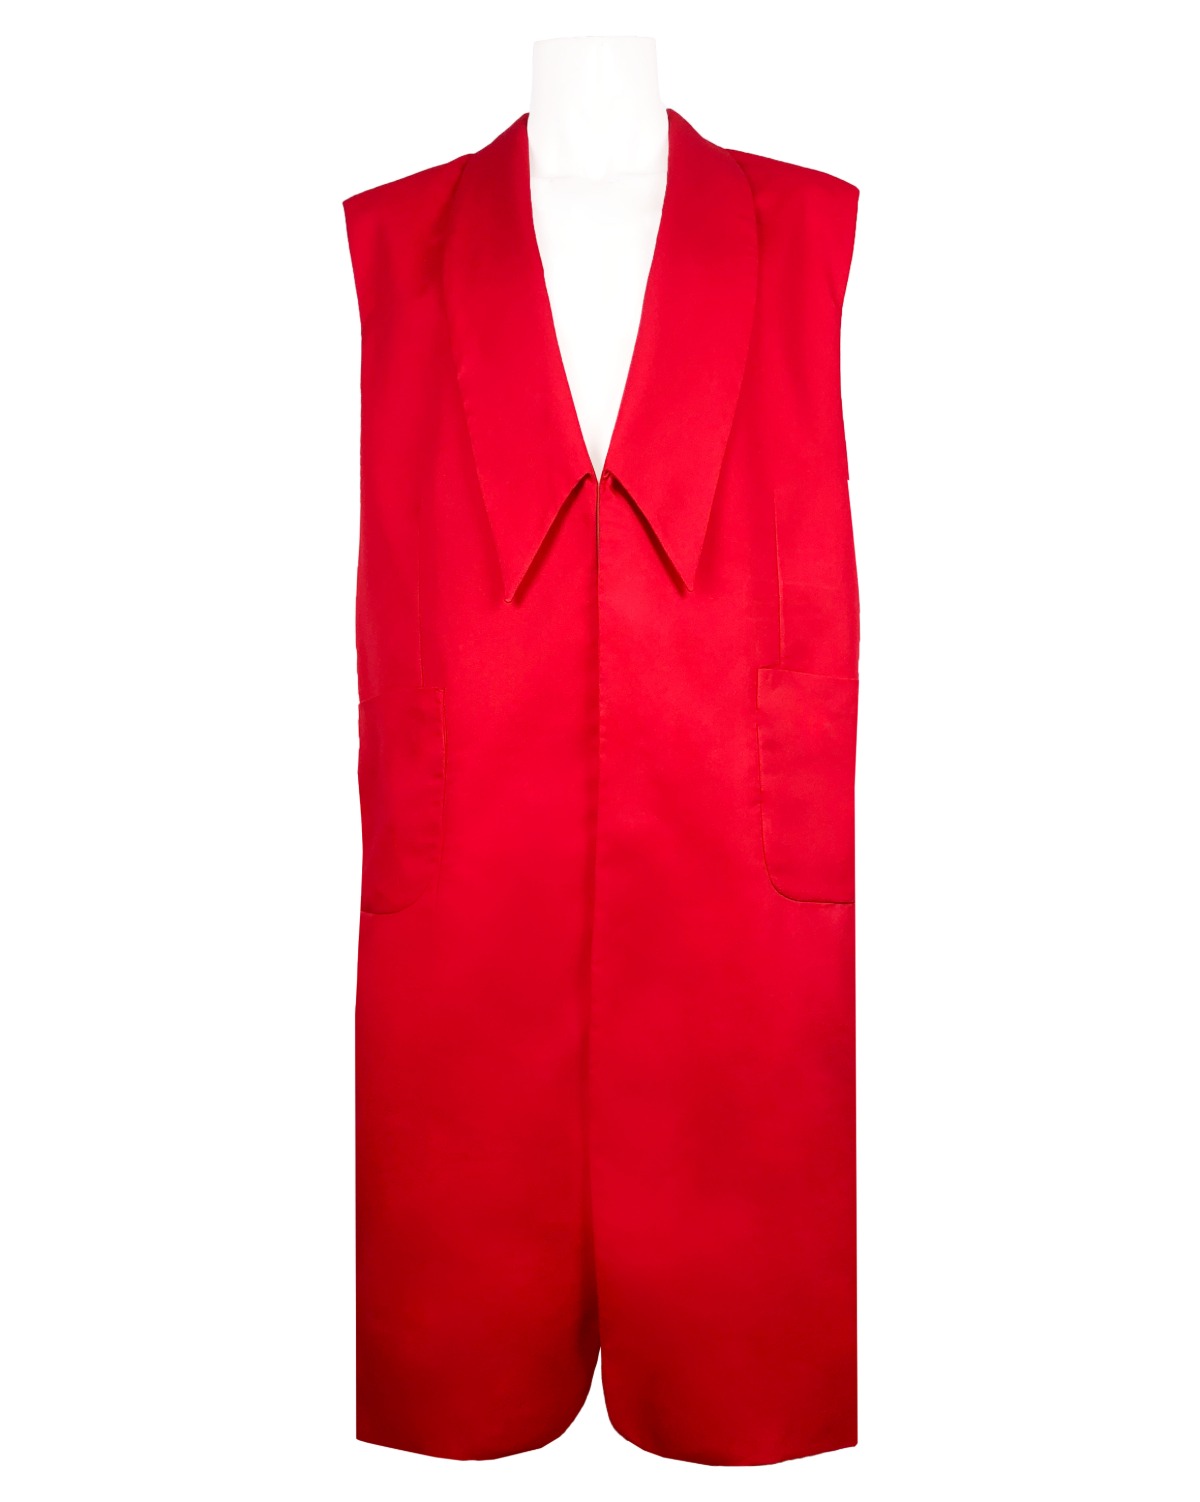 shawl collar oversized vest [red].   235,000 ₩ →50,000 ₩